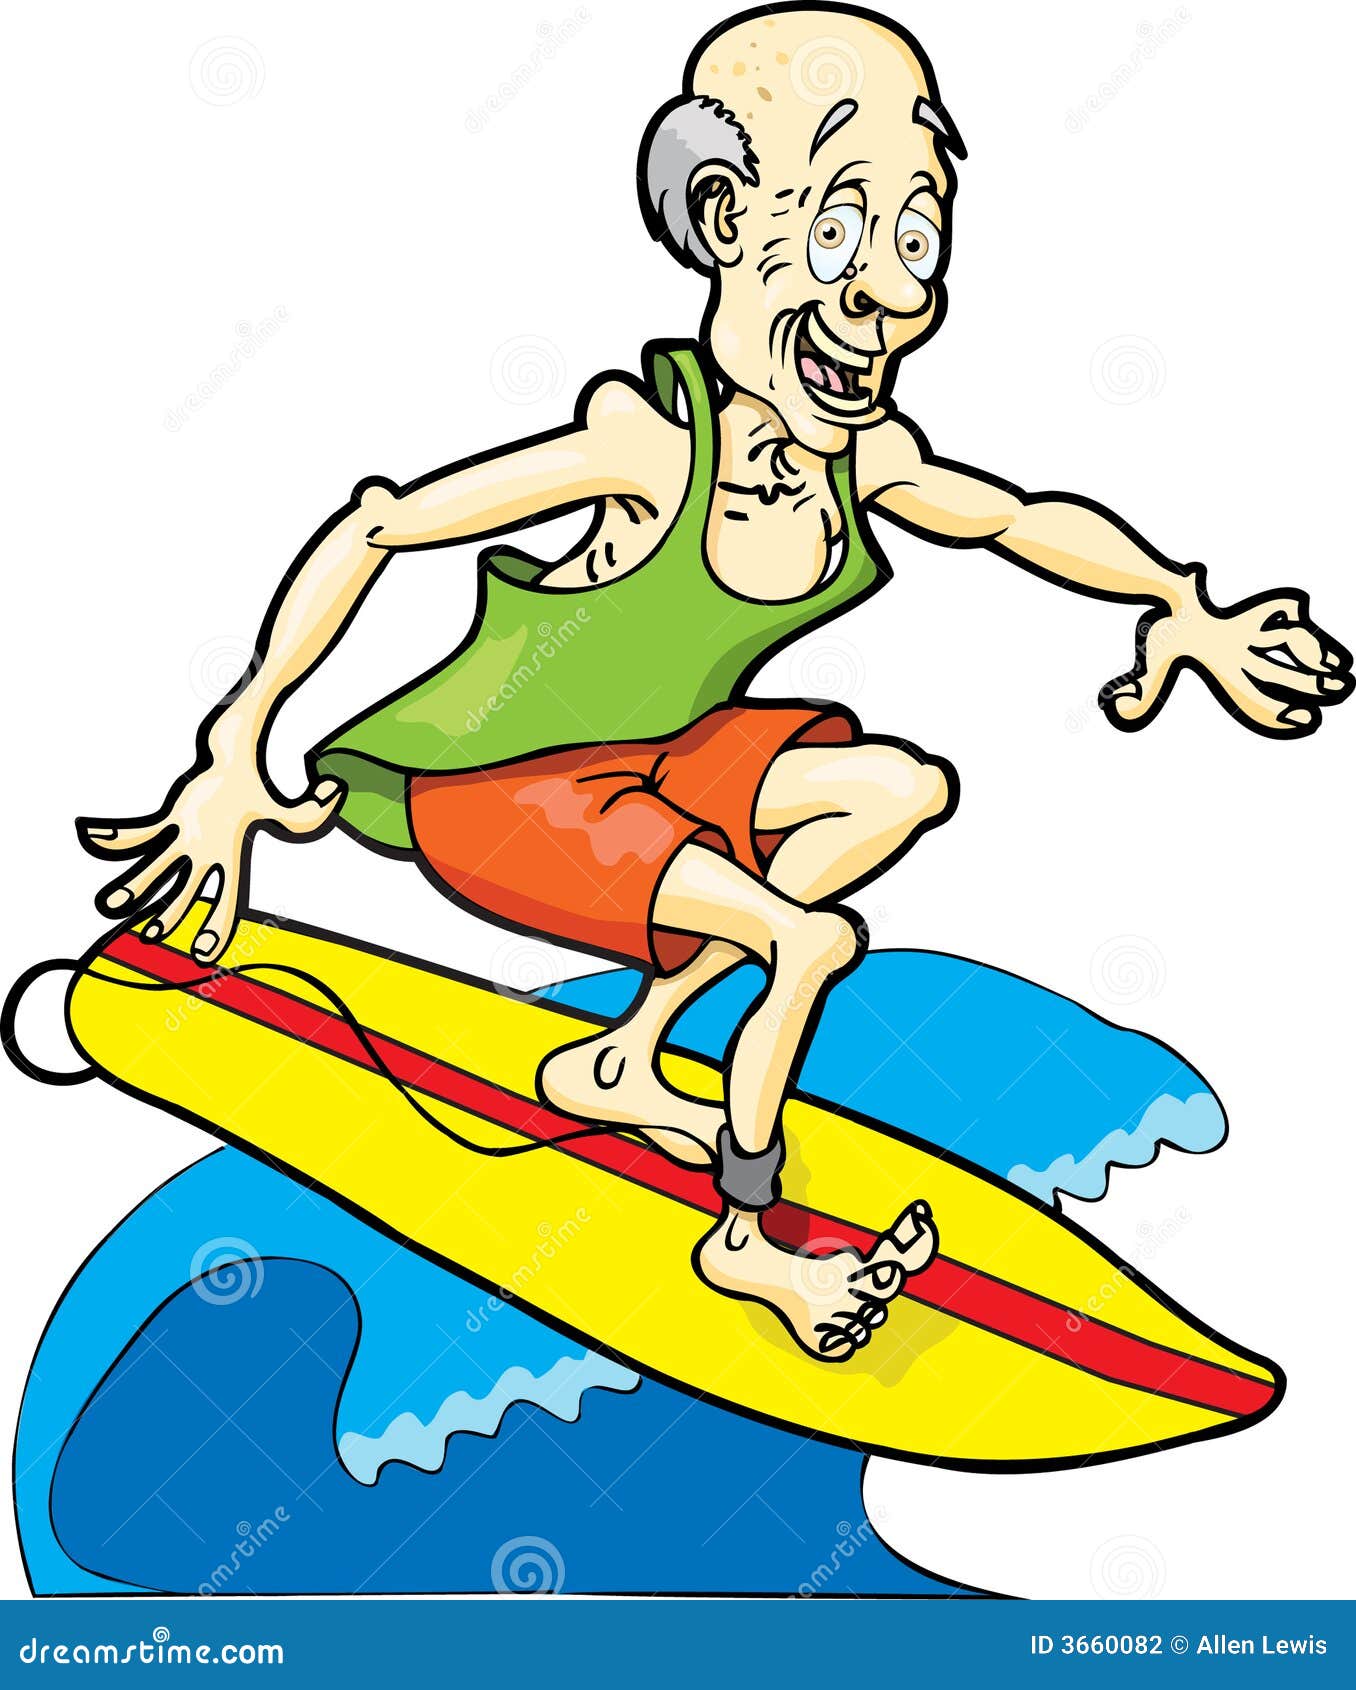 clip art retirement cartoon - photo #28